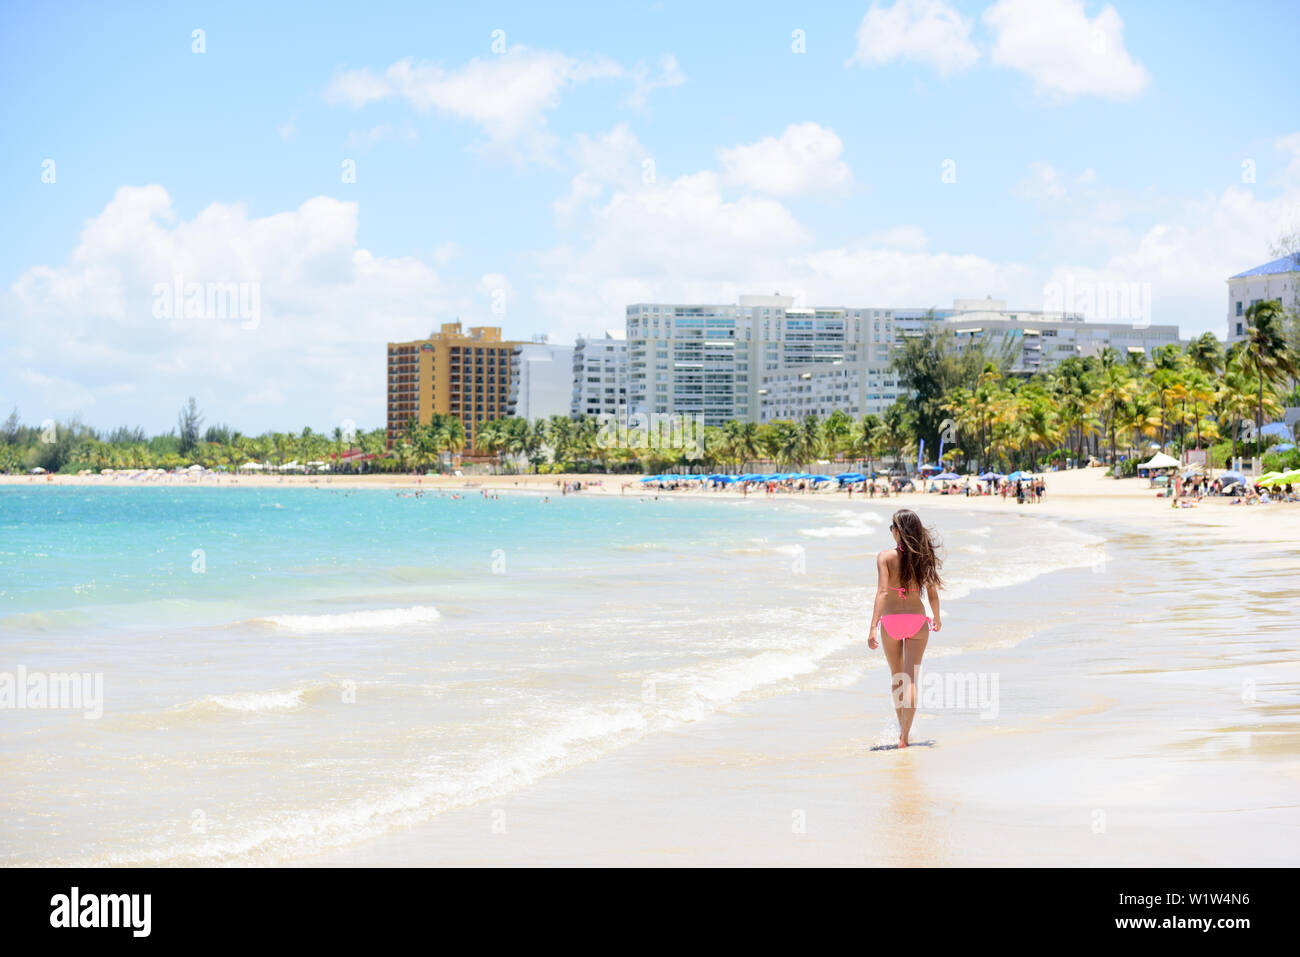 People on Isla Verde resort beach in Puerto Rico. Unrecognizable woman walking down the beach on summer holiday in bikini on famous Hispanic travel destination. Stock Photo